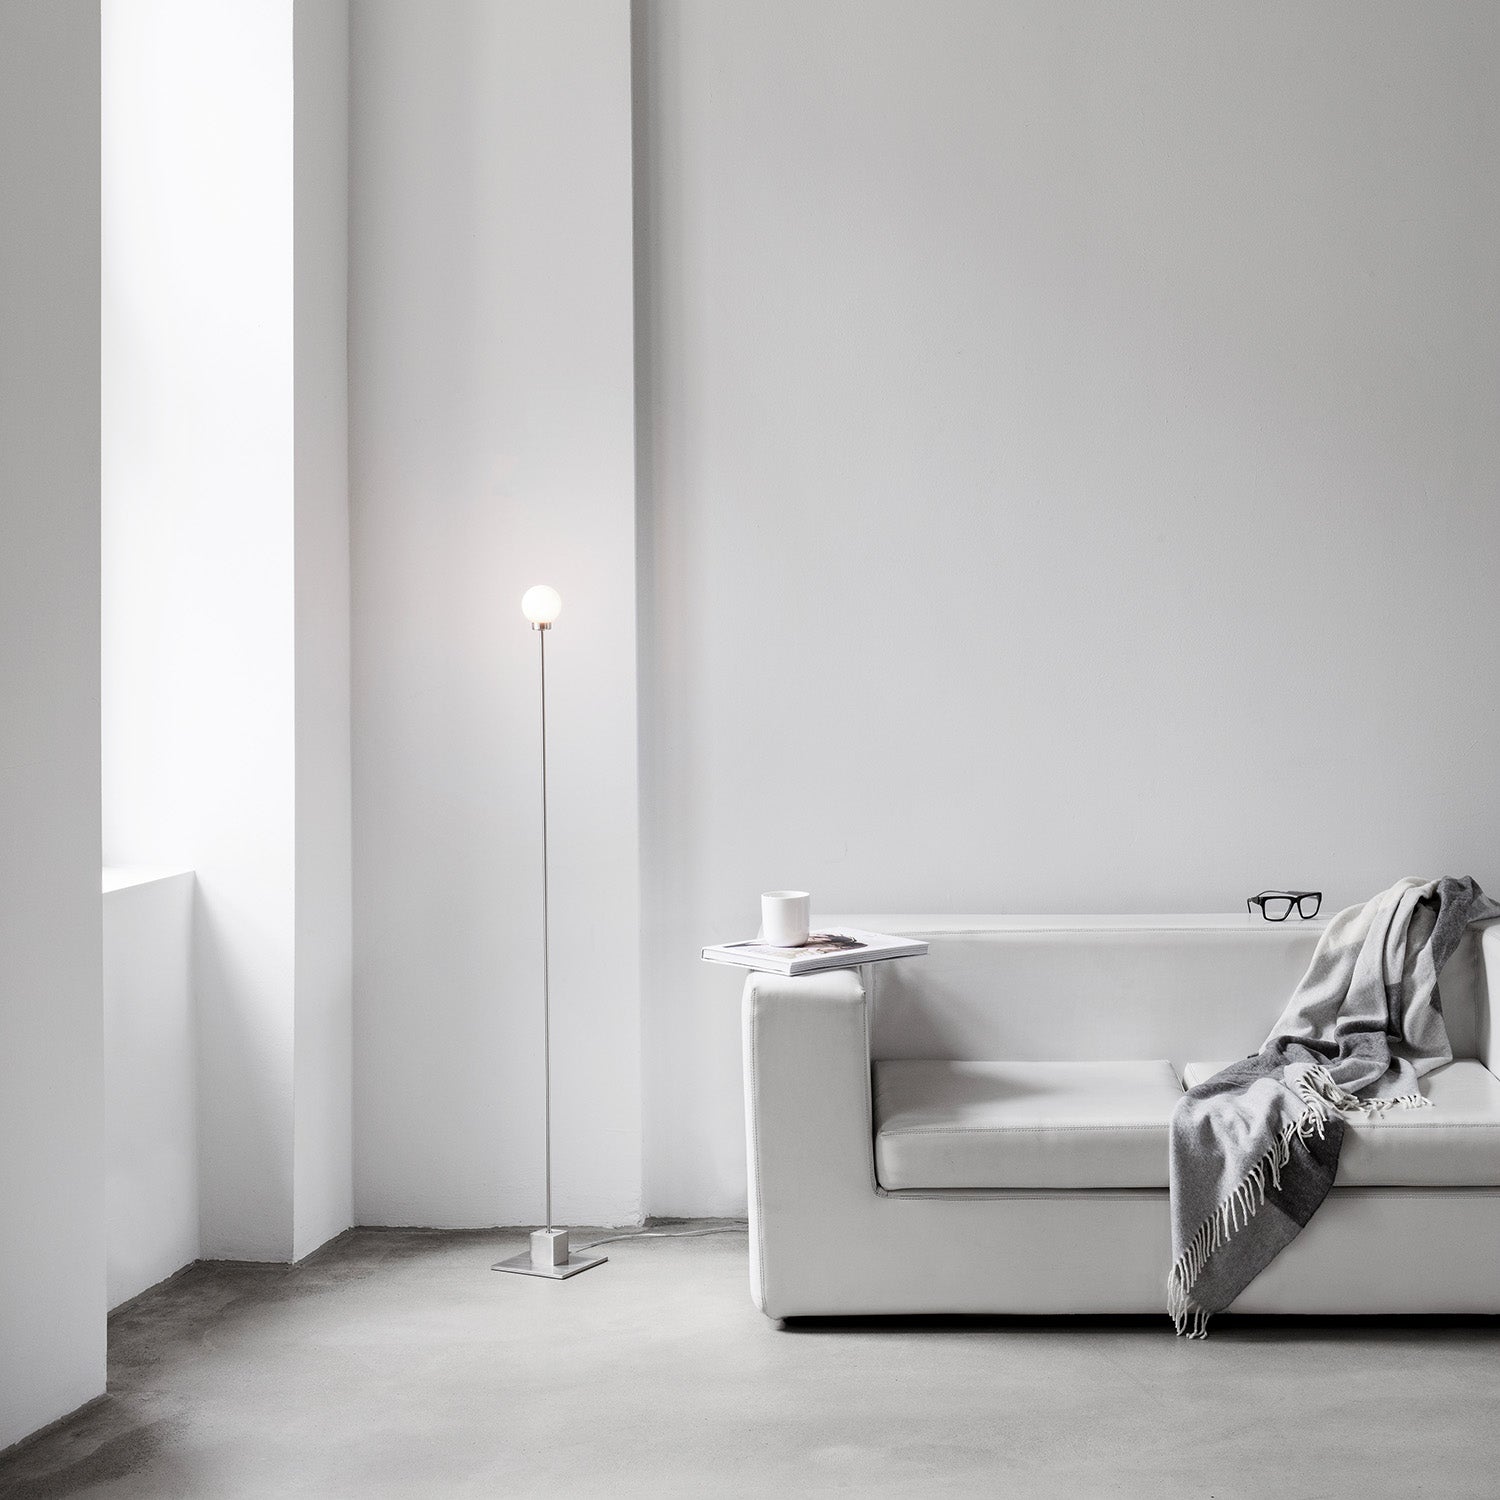 SNOWBALL - Minimalist living room rod floor lamp, designer creation